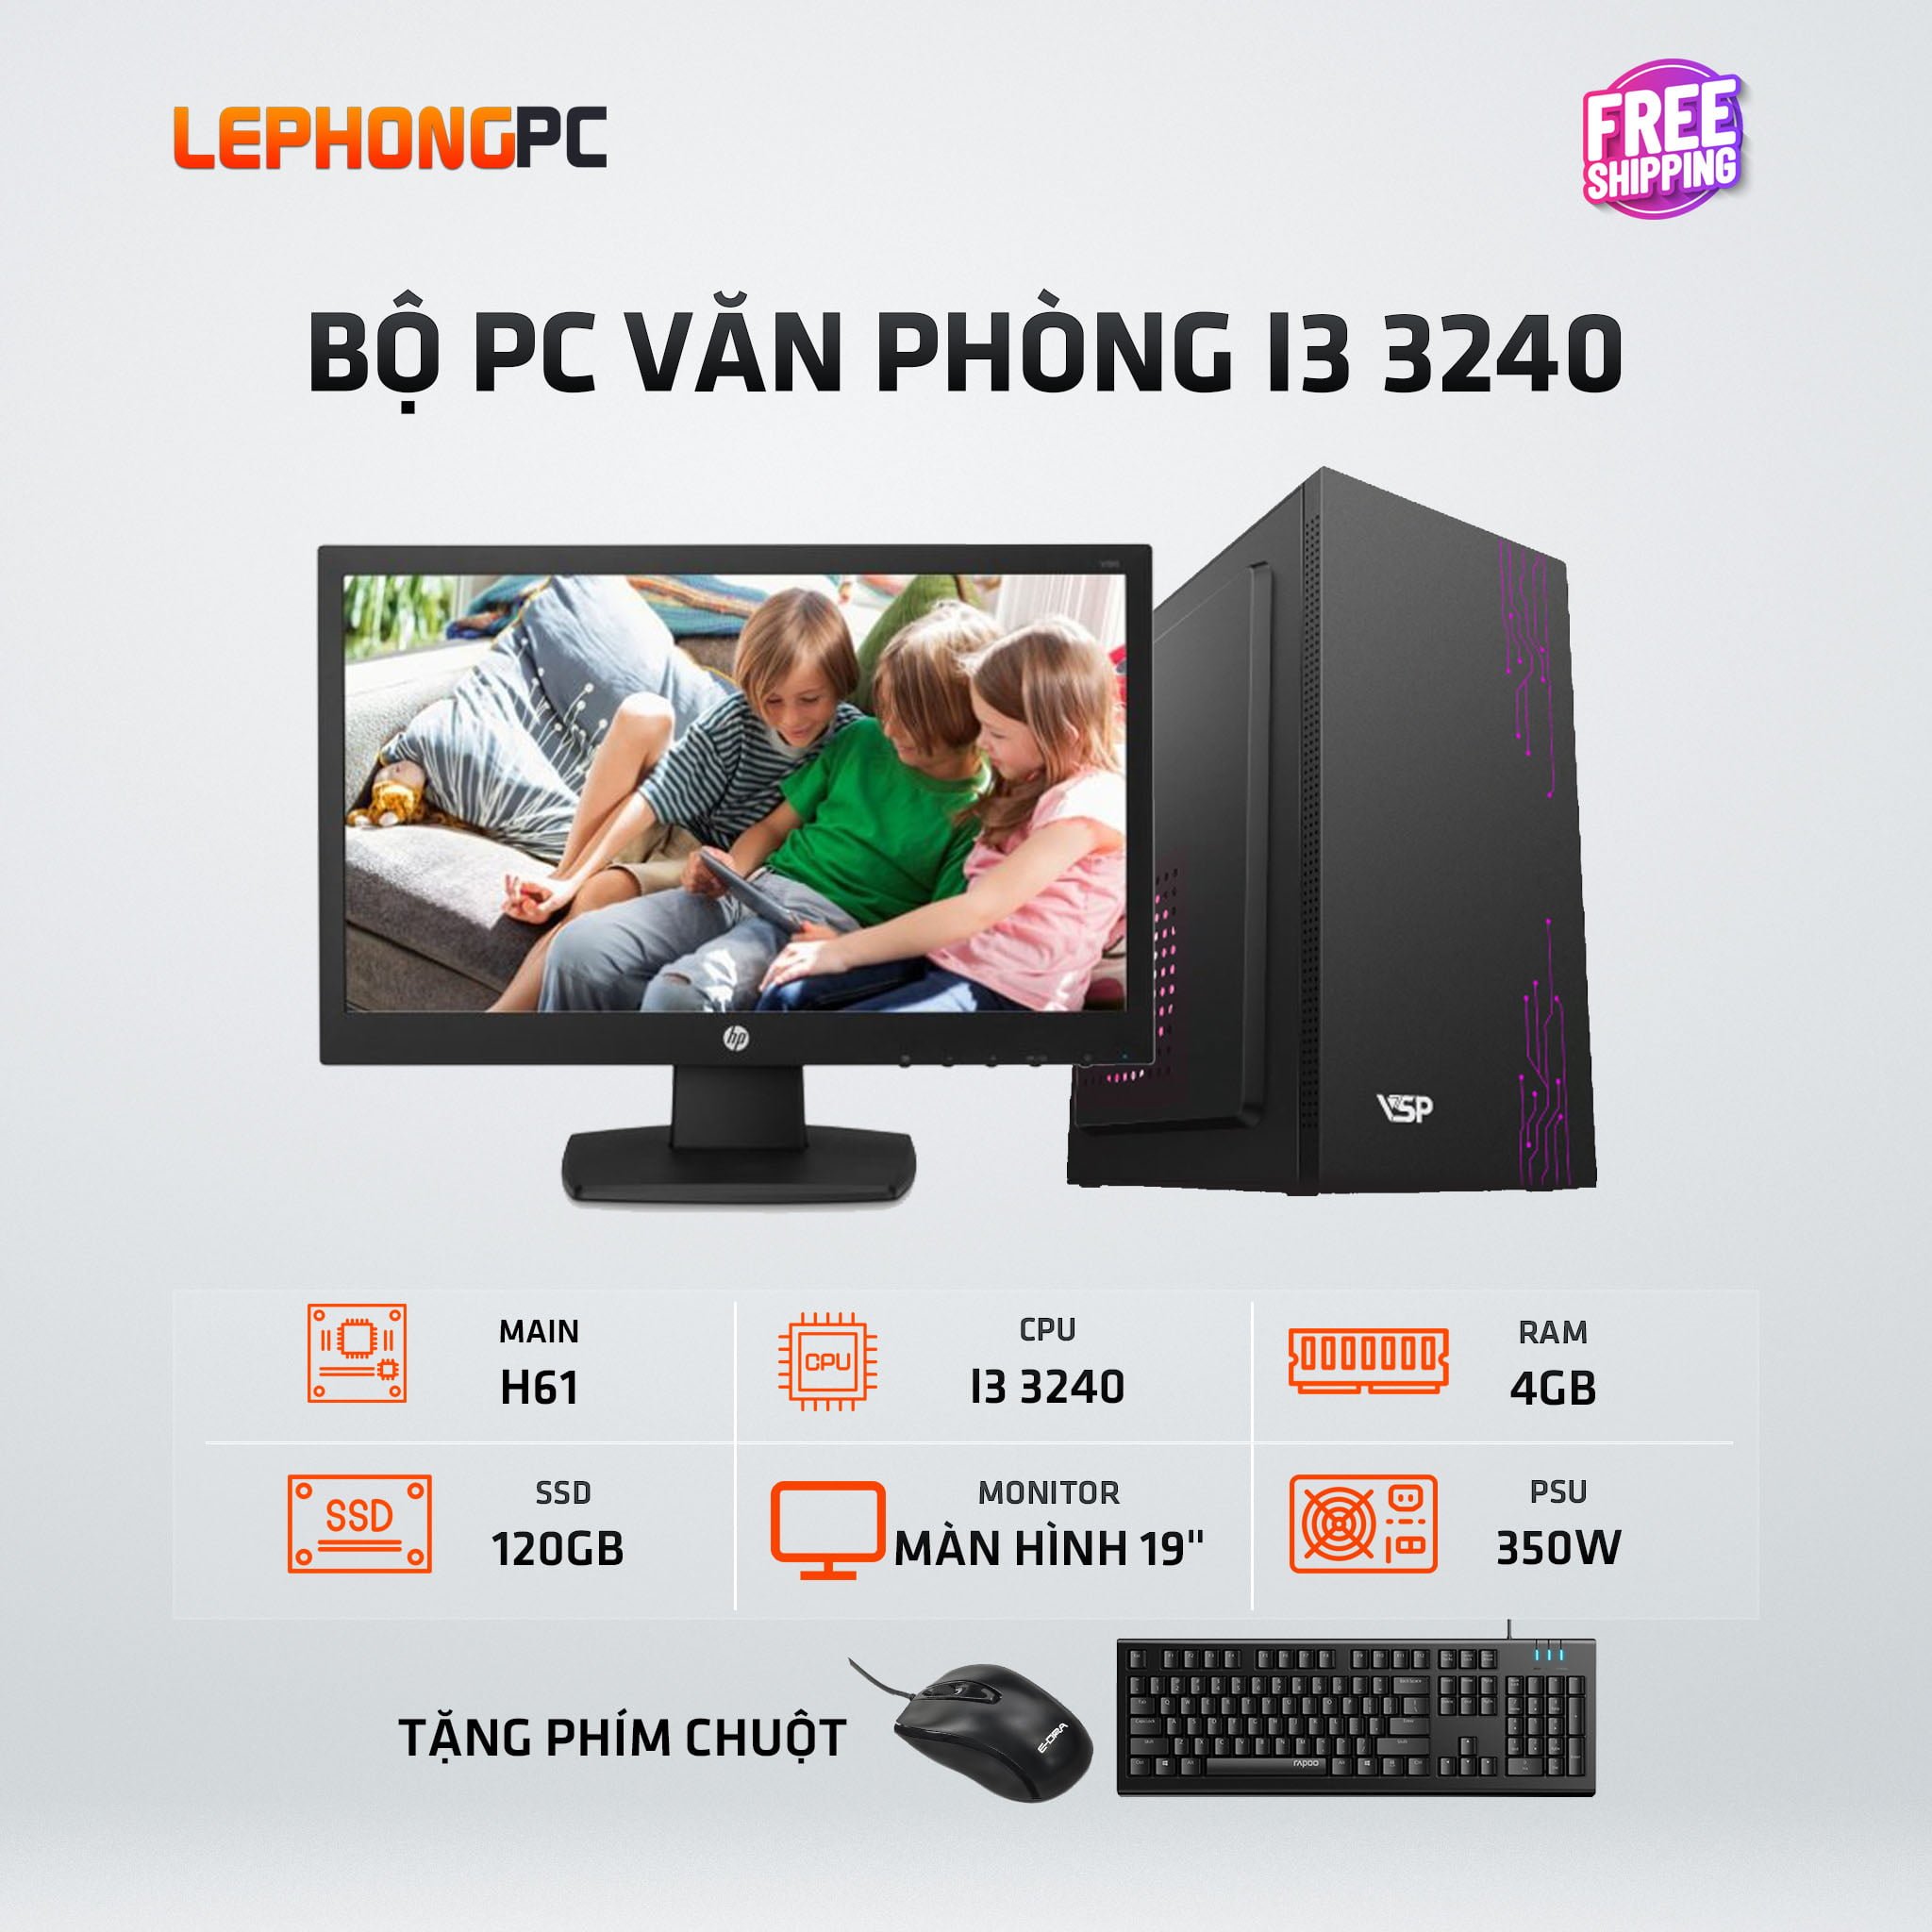 BO PC VAN PHONG I3 3240